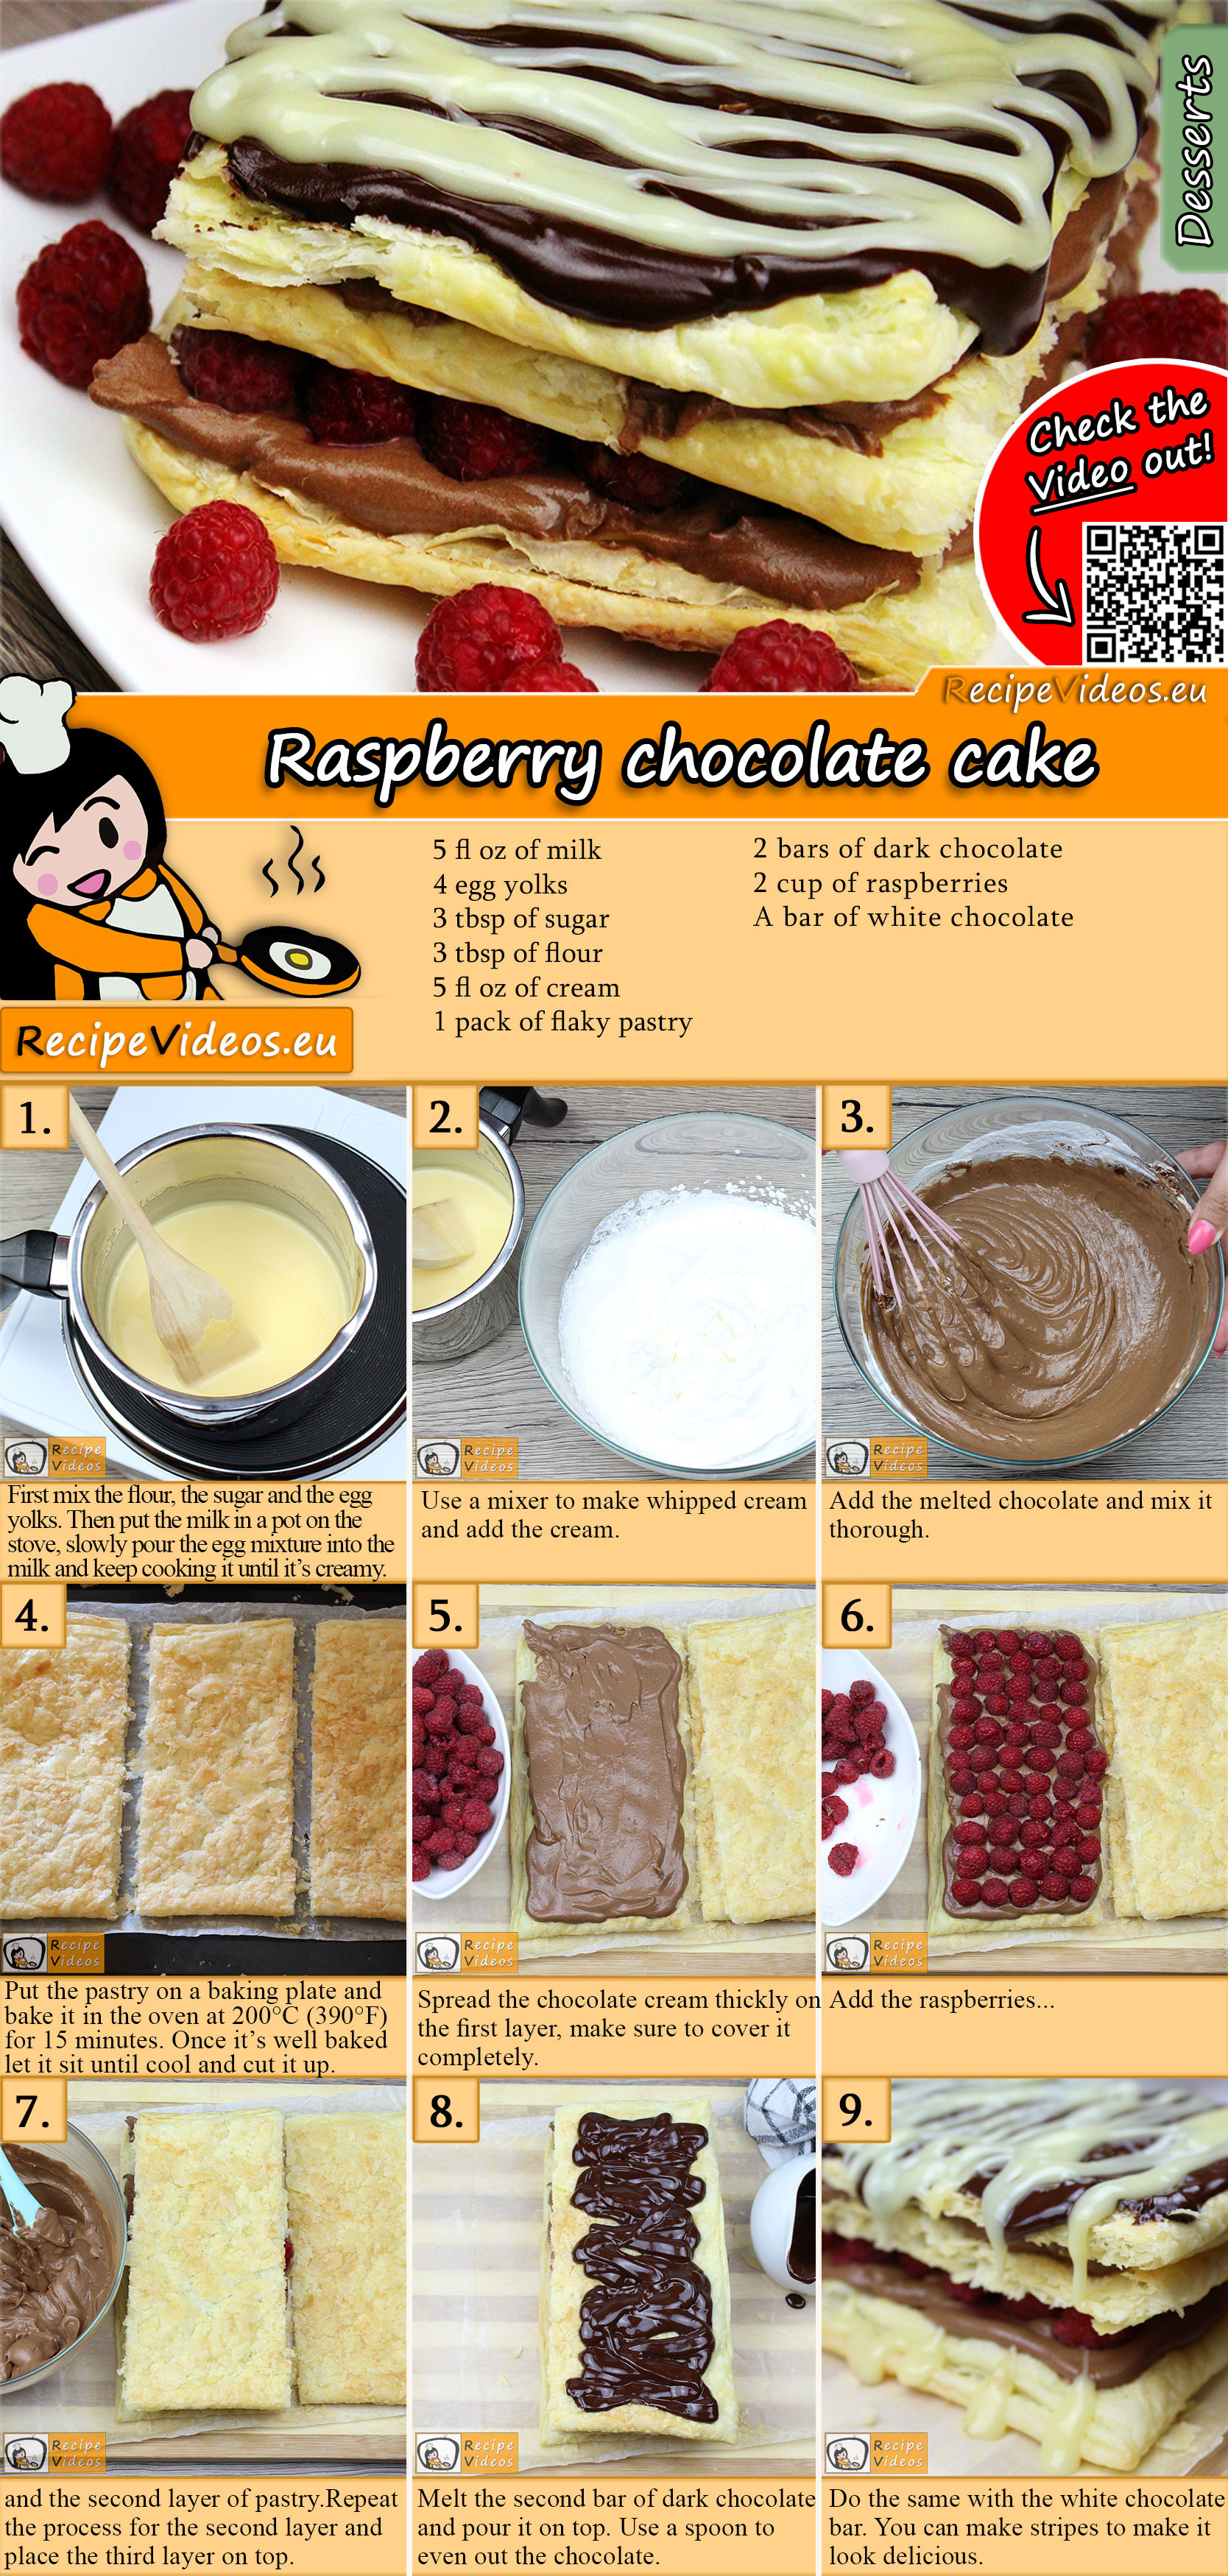 Raspberry chocolate cake recipe with video